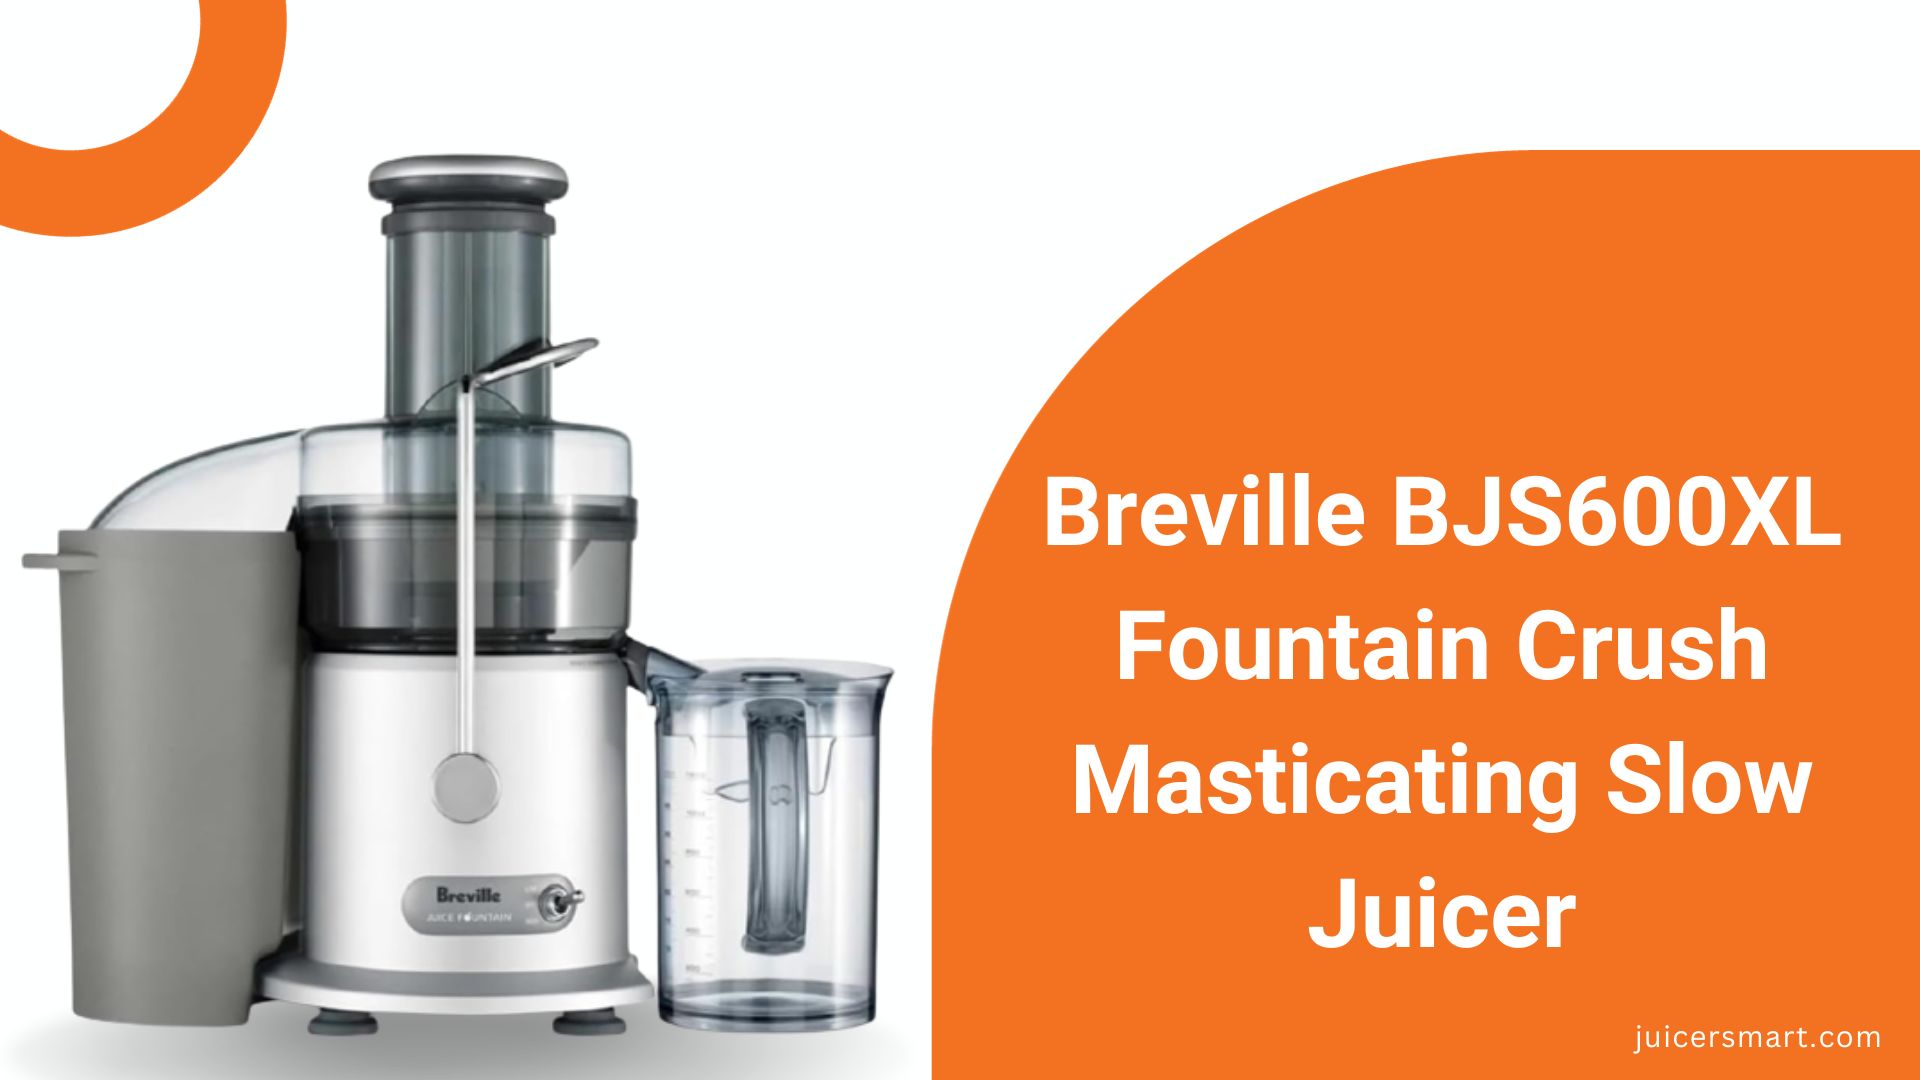 Breville BJS600XL Fountain Crush Masticating Slow Juicer